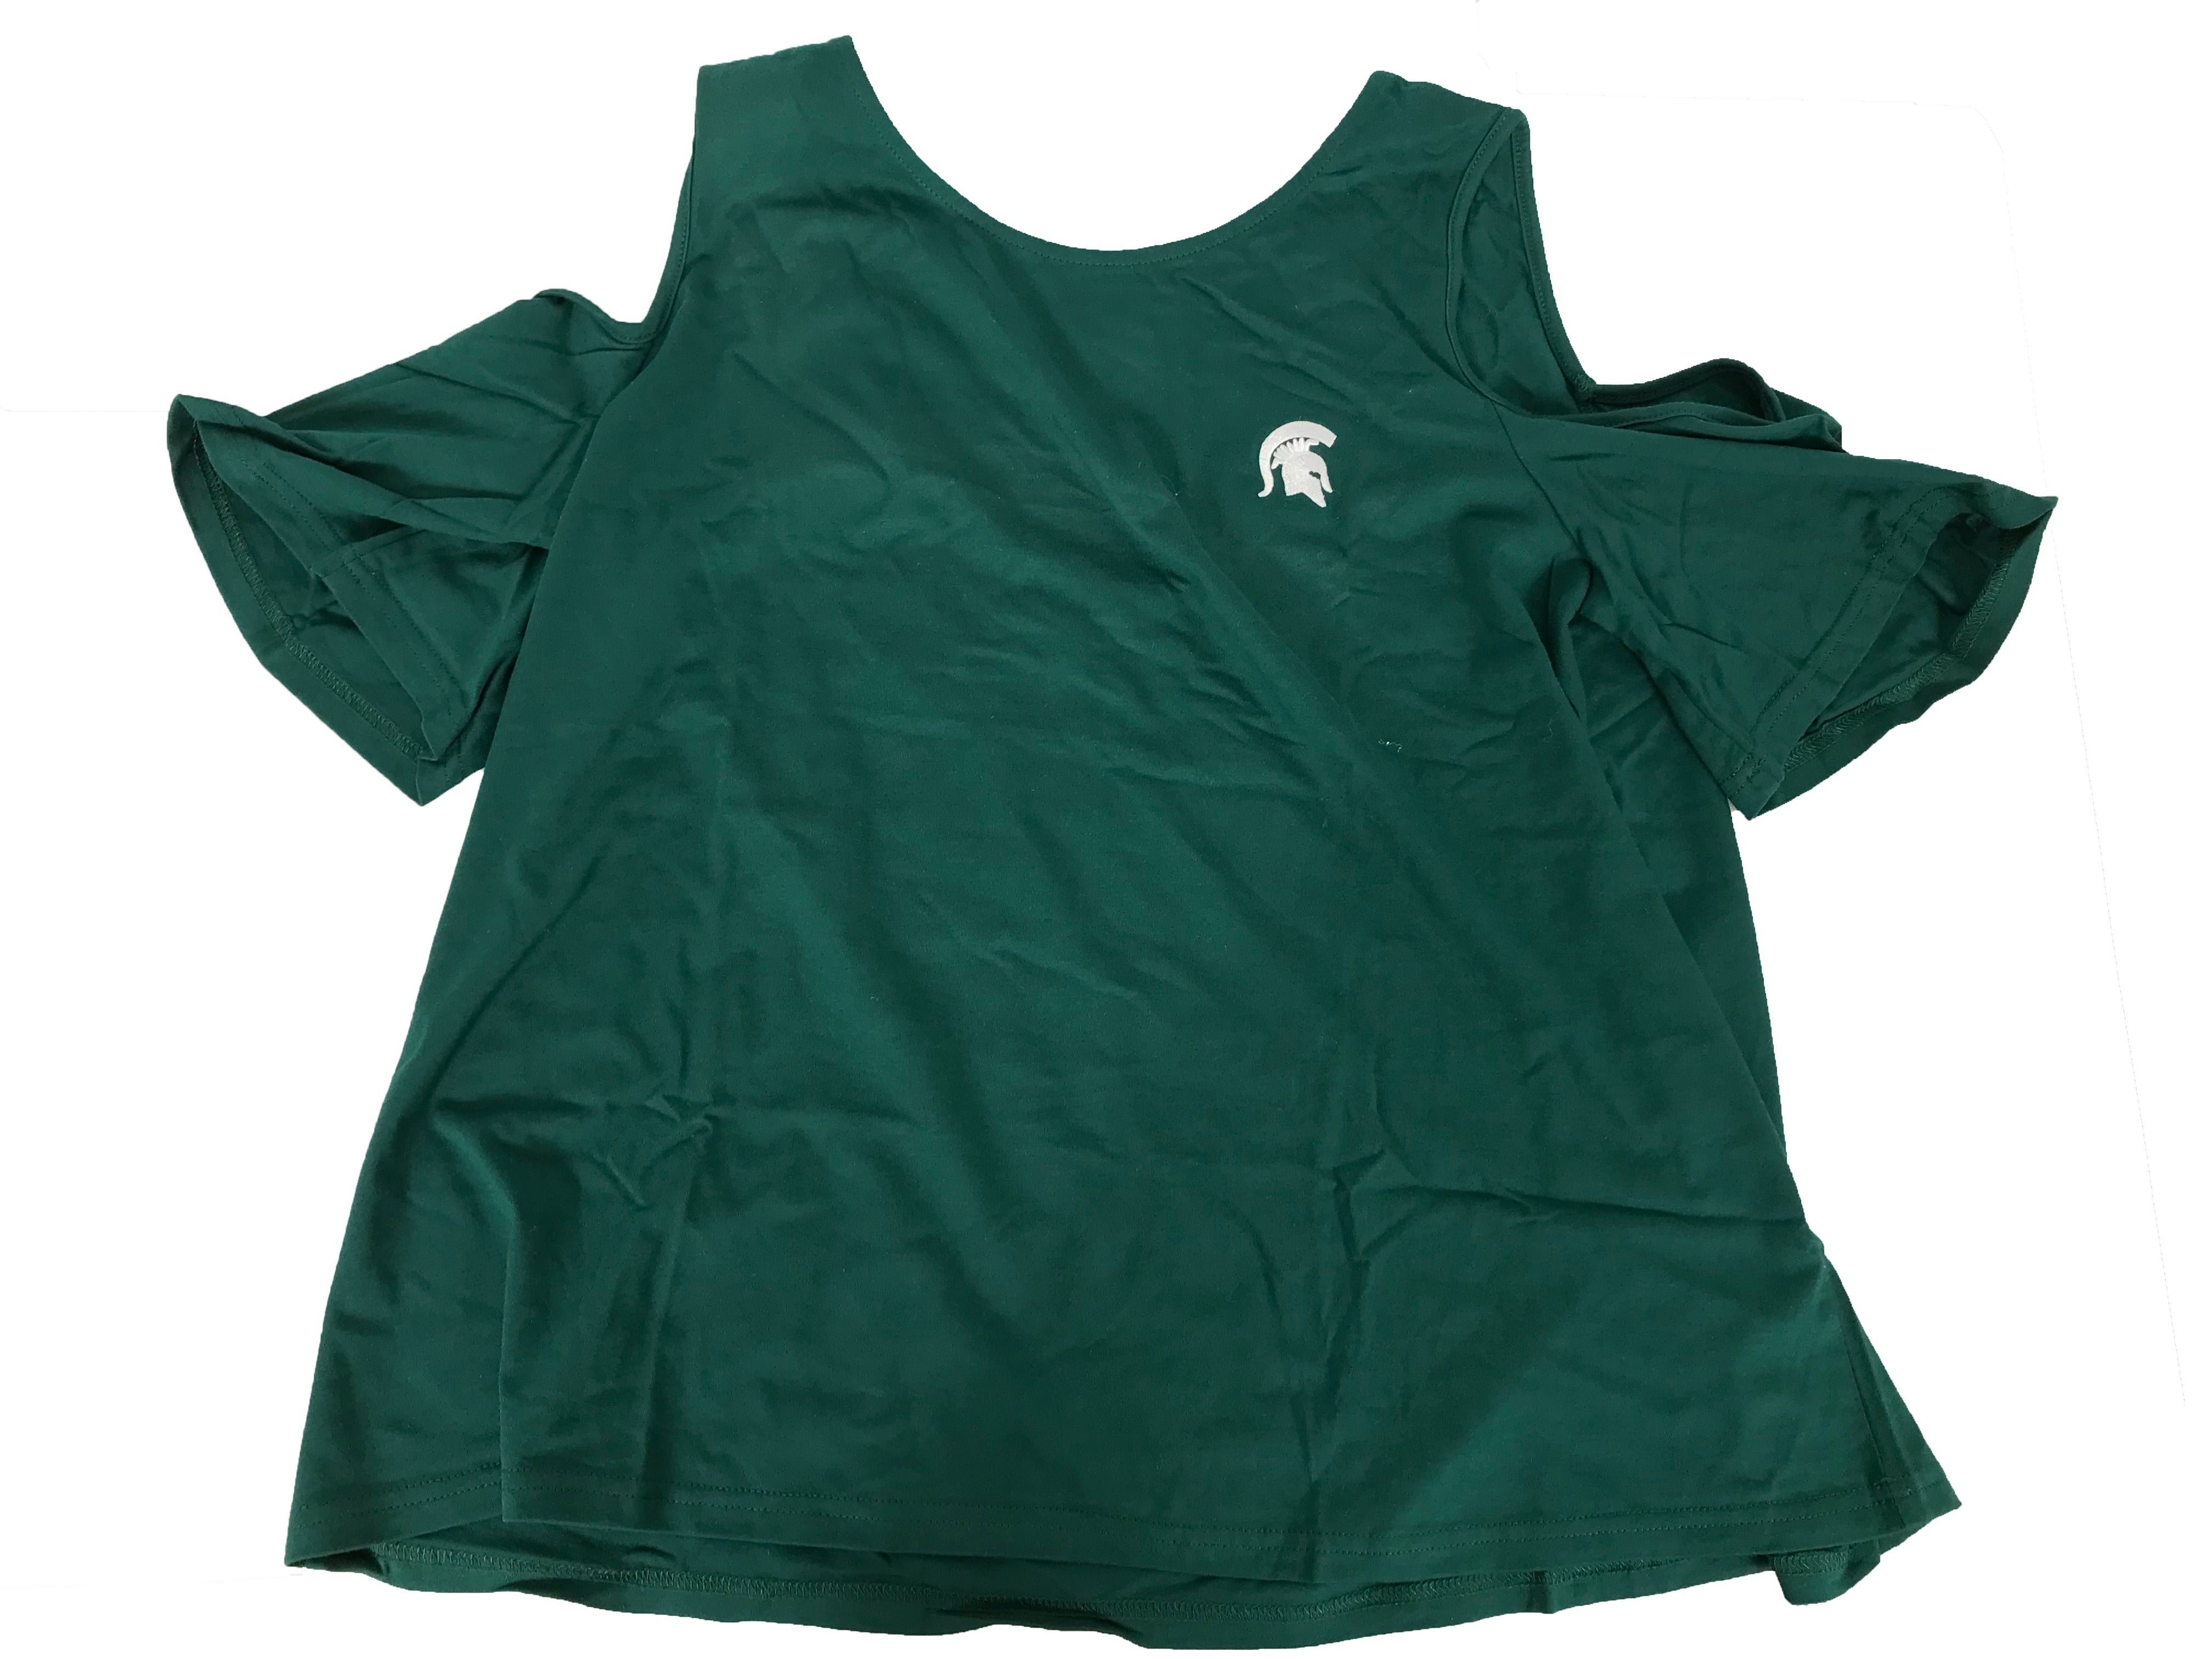 MSU Green Cutout Shoulder Shirt Women's Size Medium